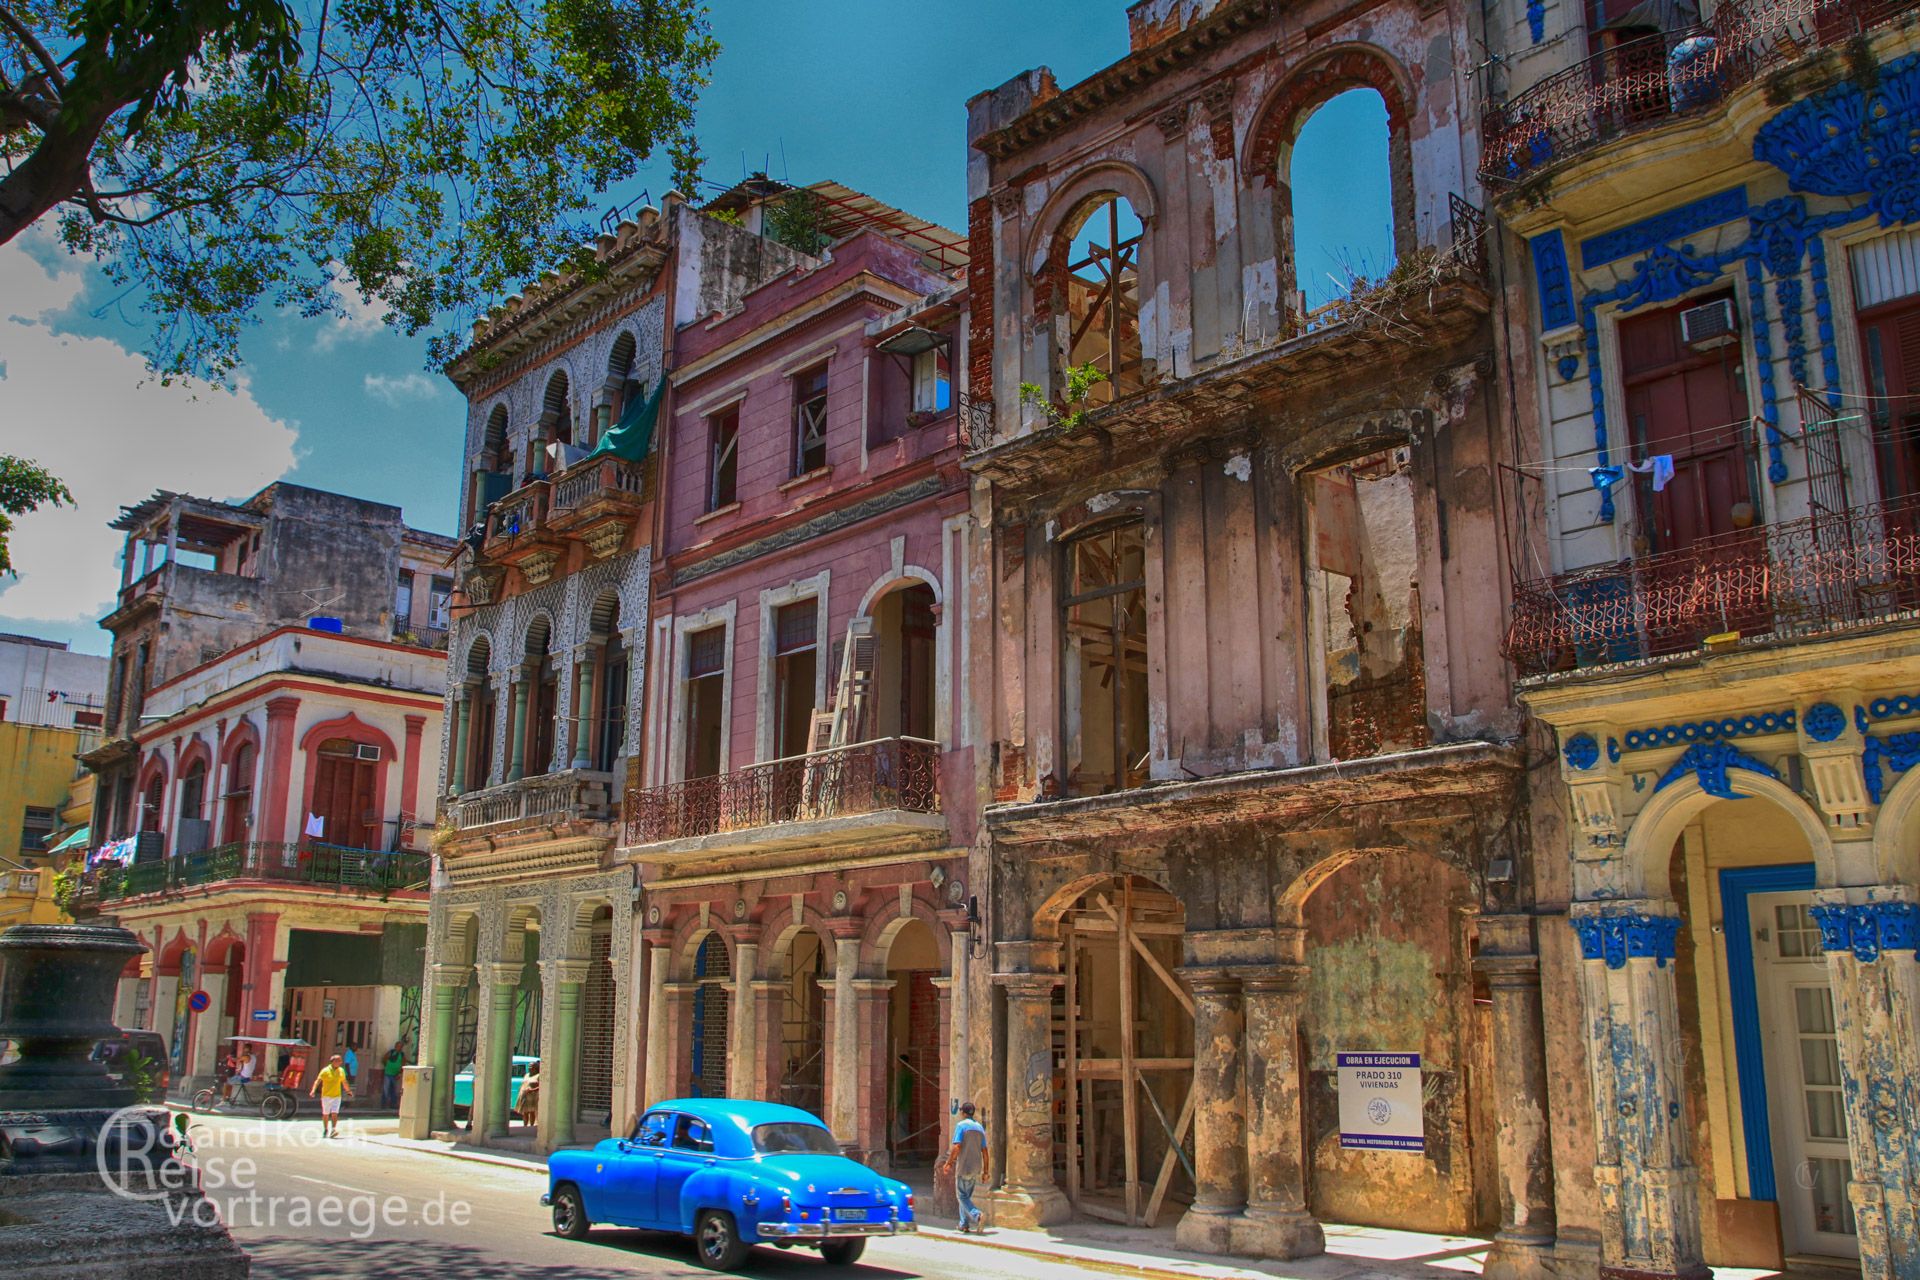 Cuba, Havana, Havana Vieja, dilapidated houses, restored classic cars